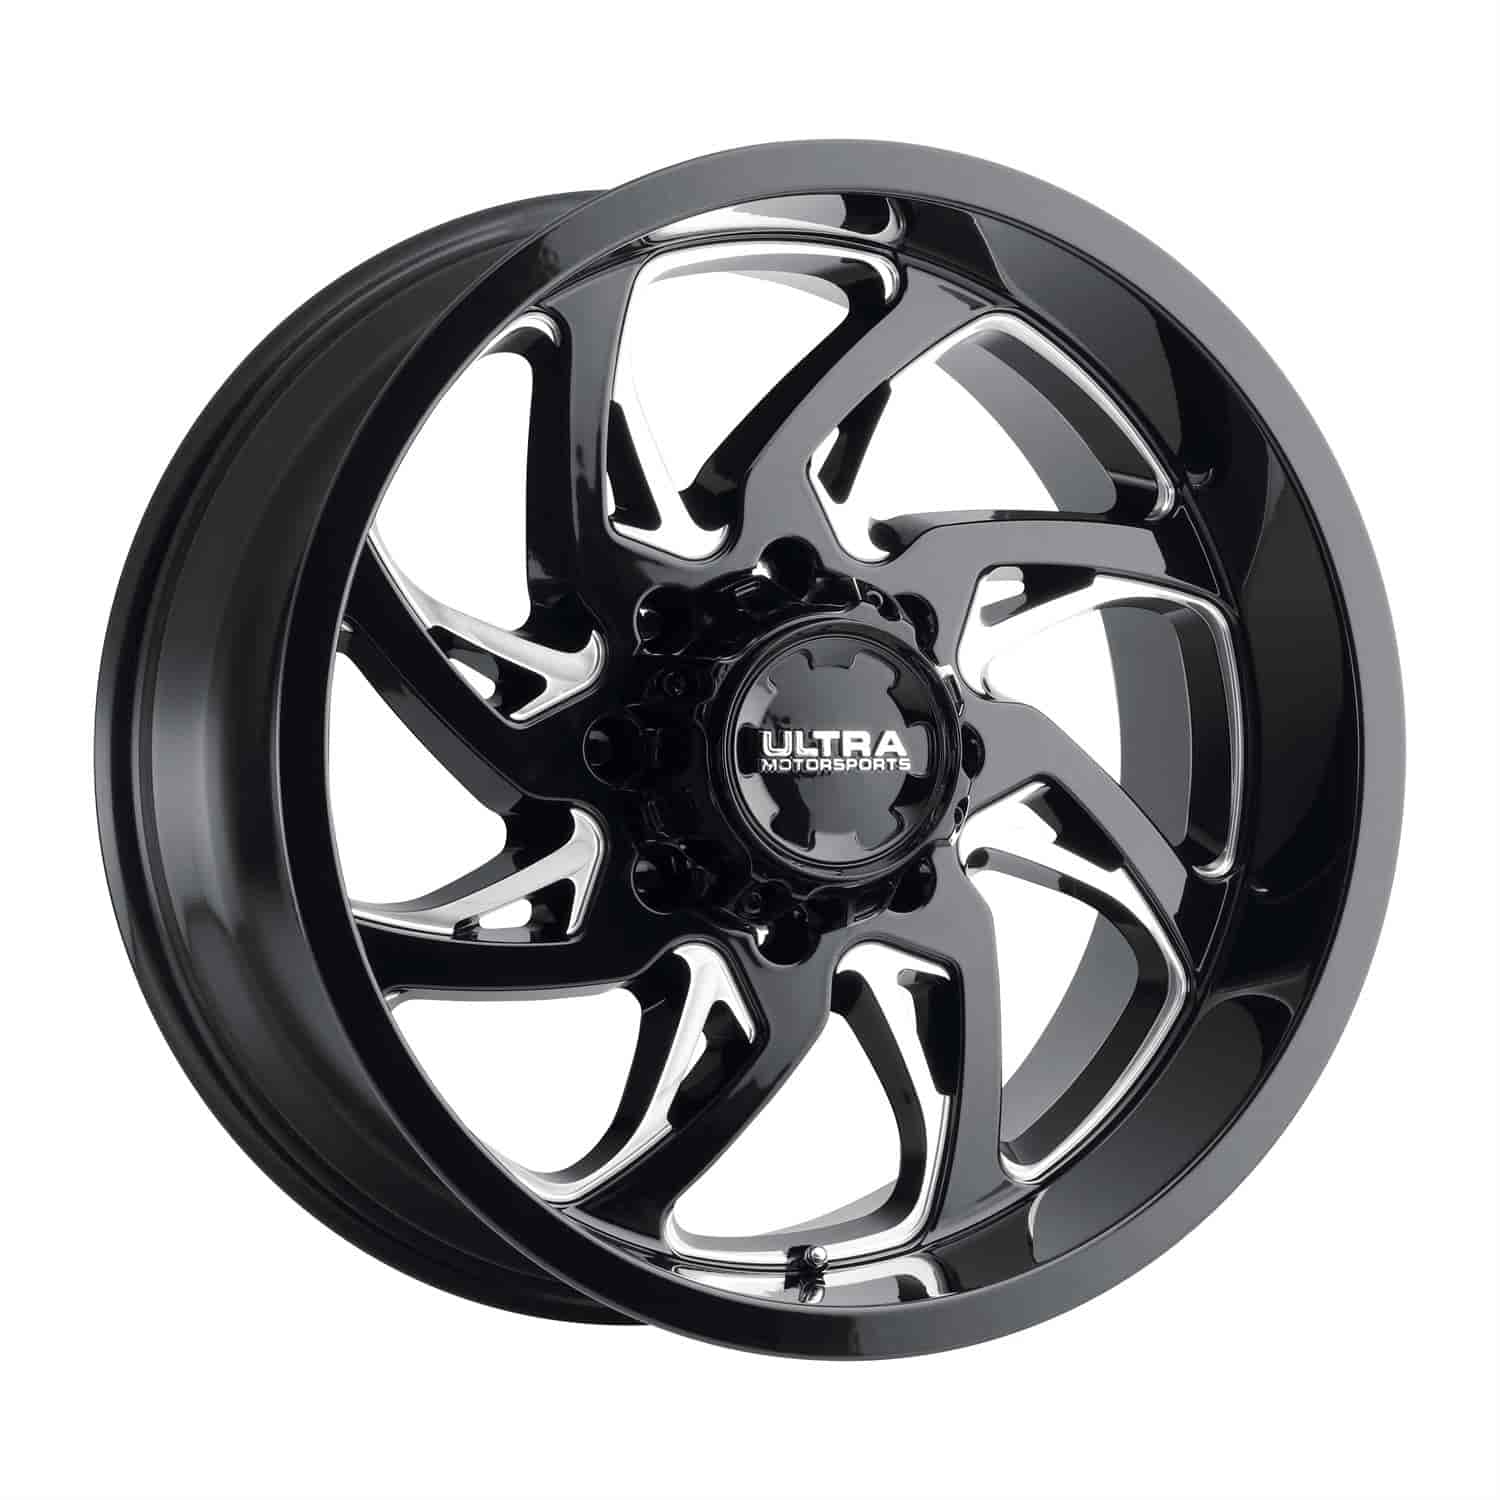 230-Series Villain Wheel, Size: 24x12", Bolt Pattern: 8x180 mm [Gloss Black w/Milled Accents]